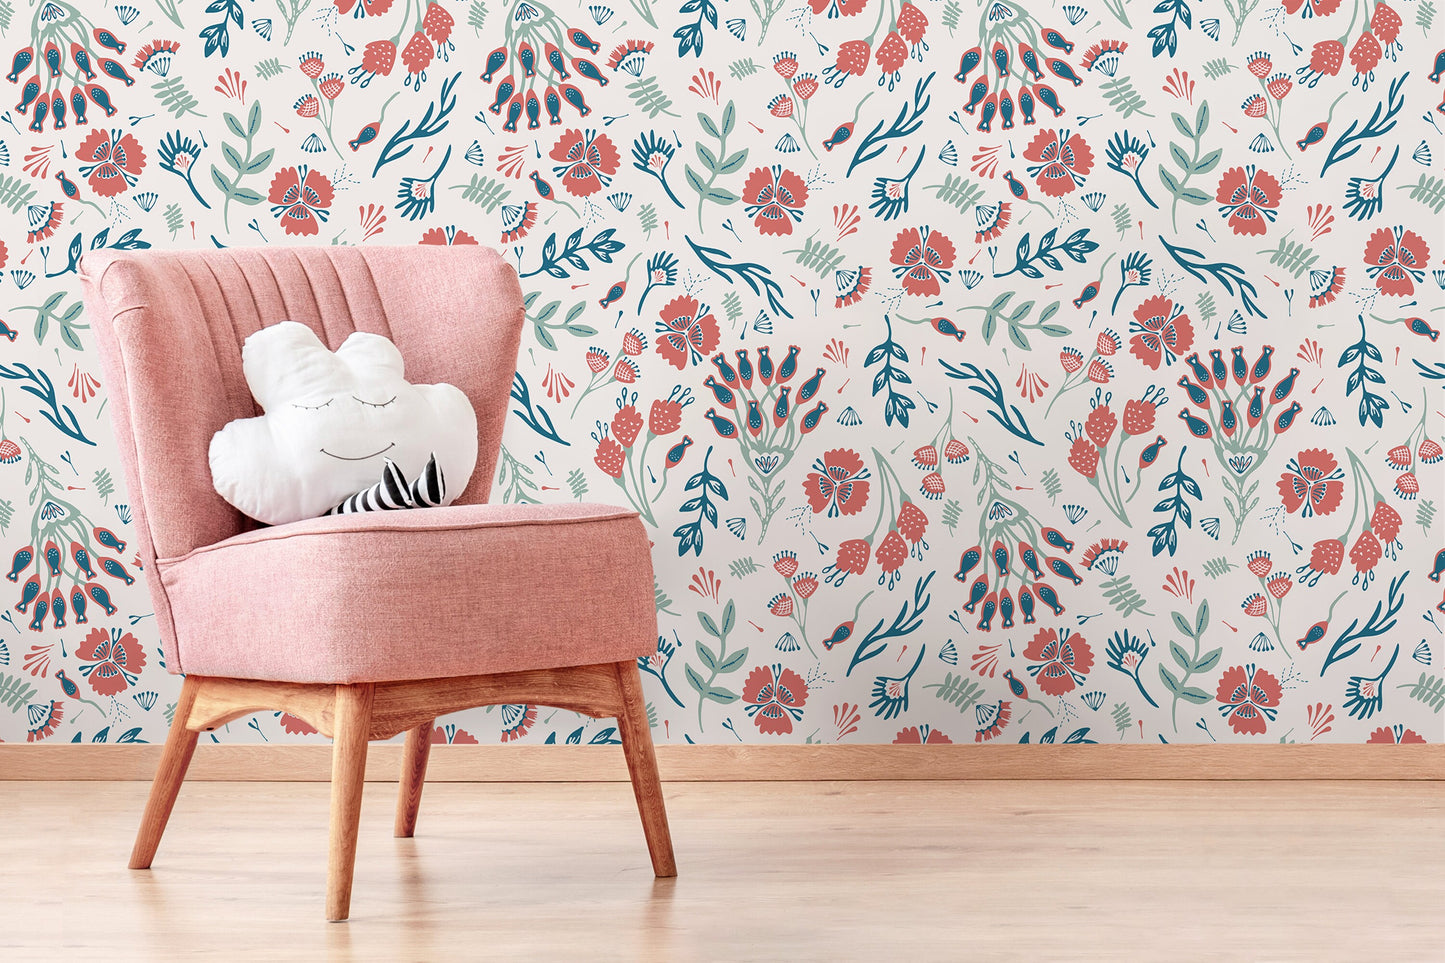 Cute Floral Wallpaper / Peel and Stick Wallpaper Removable Wallpaper Home Decor Wall Art Wall Decor Room Decor - D361